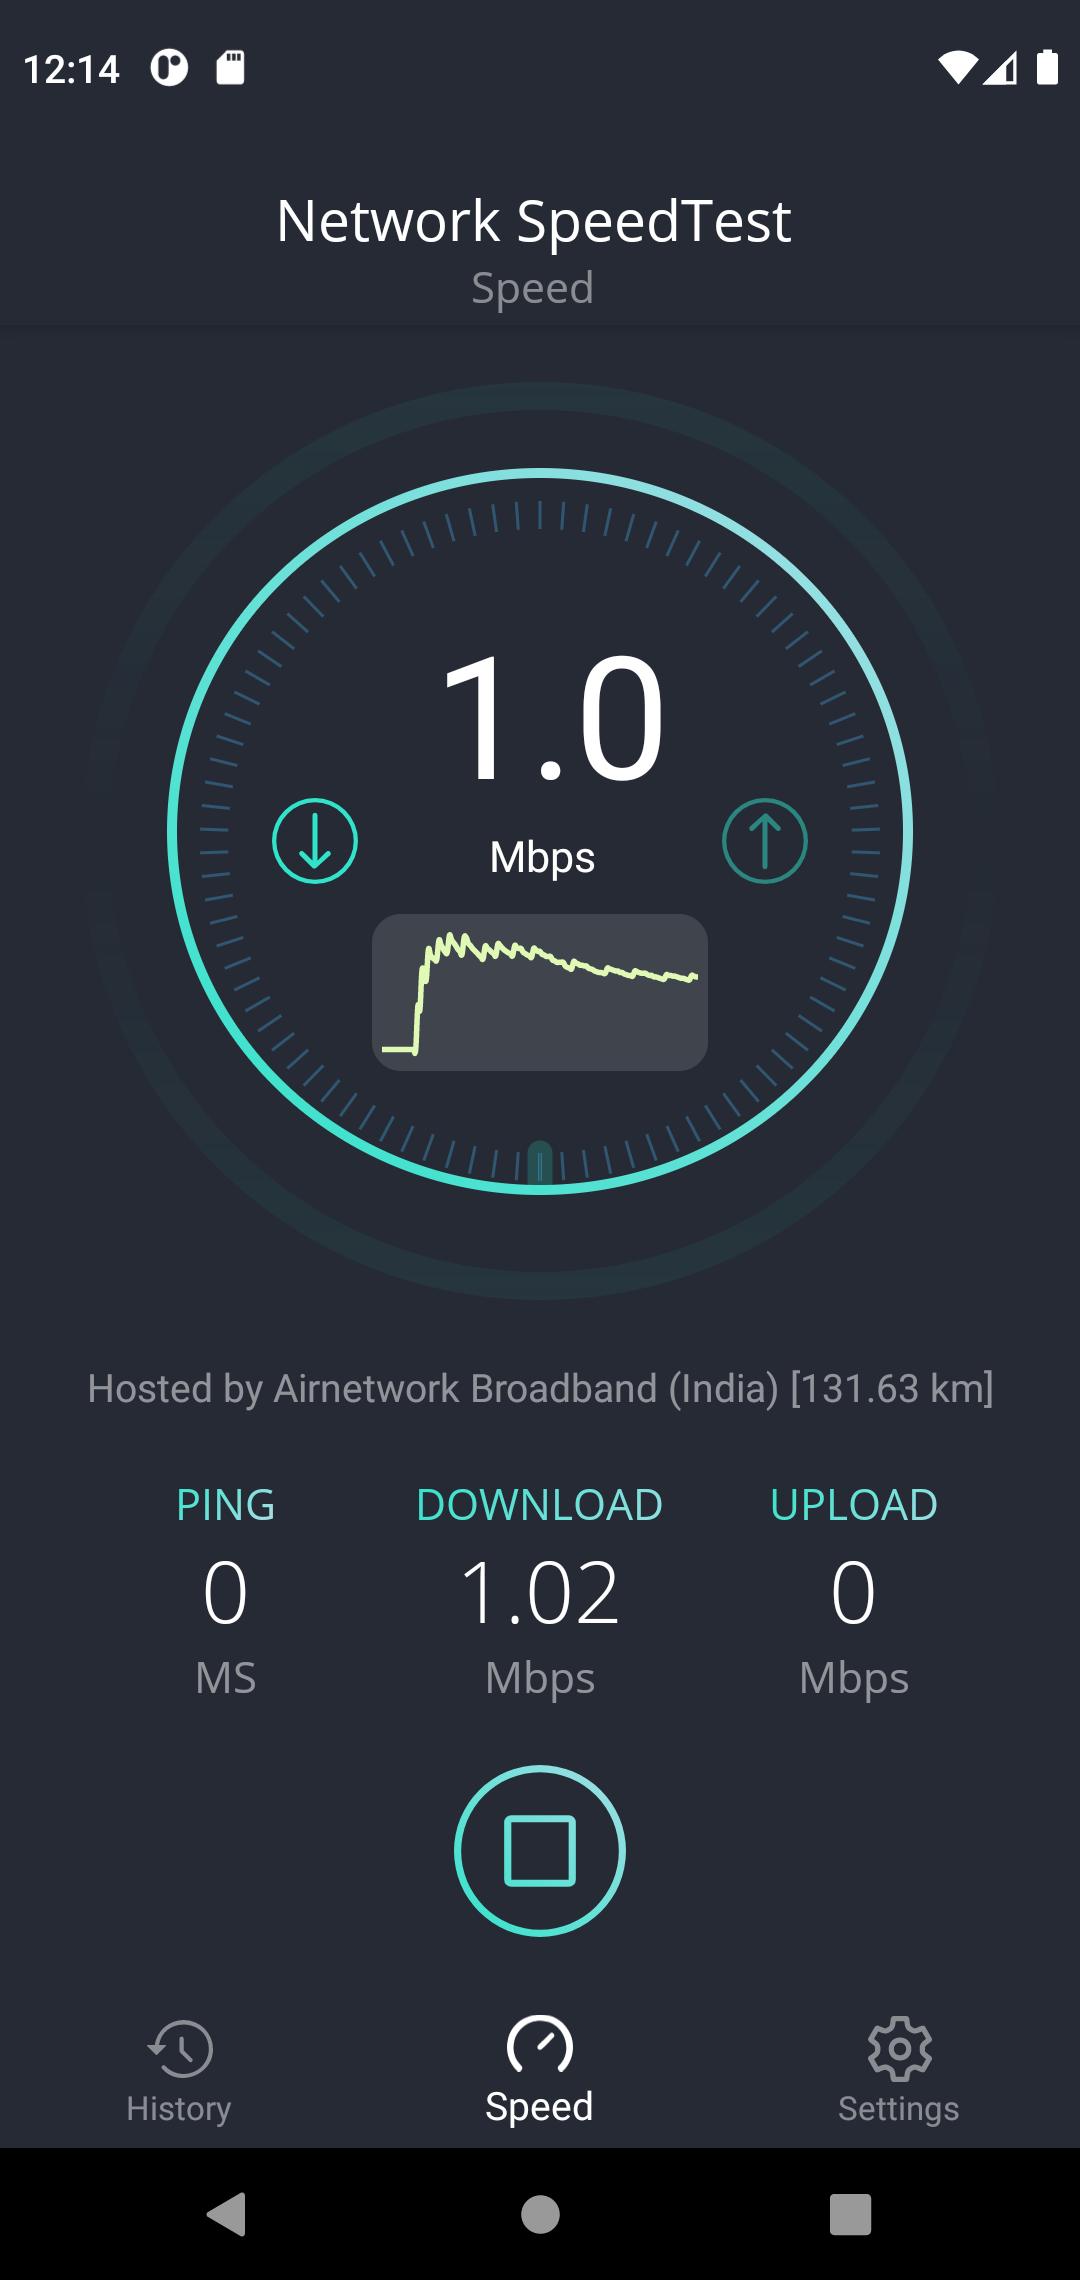 Network Speed Test. First Speed indicator. Network Speed Test Android TV. Net Speed indicator Android 13.